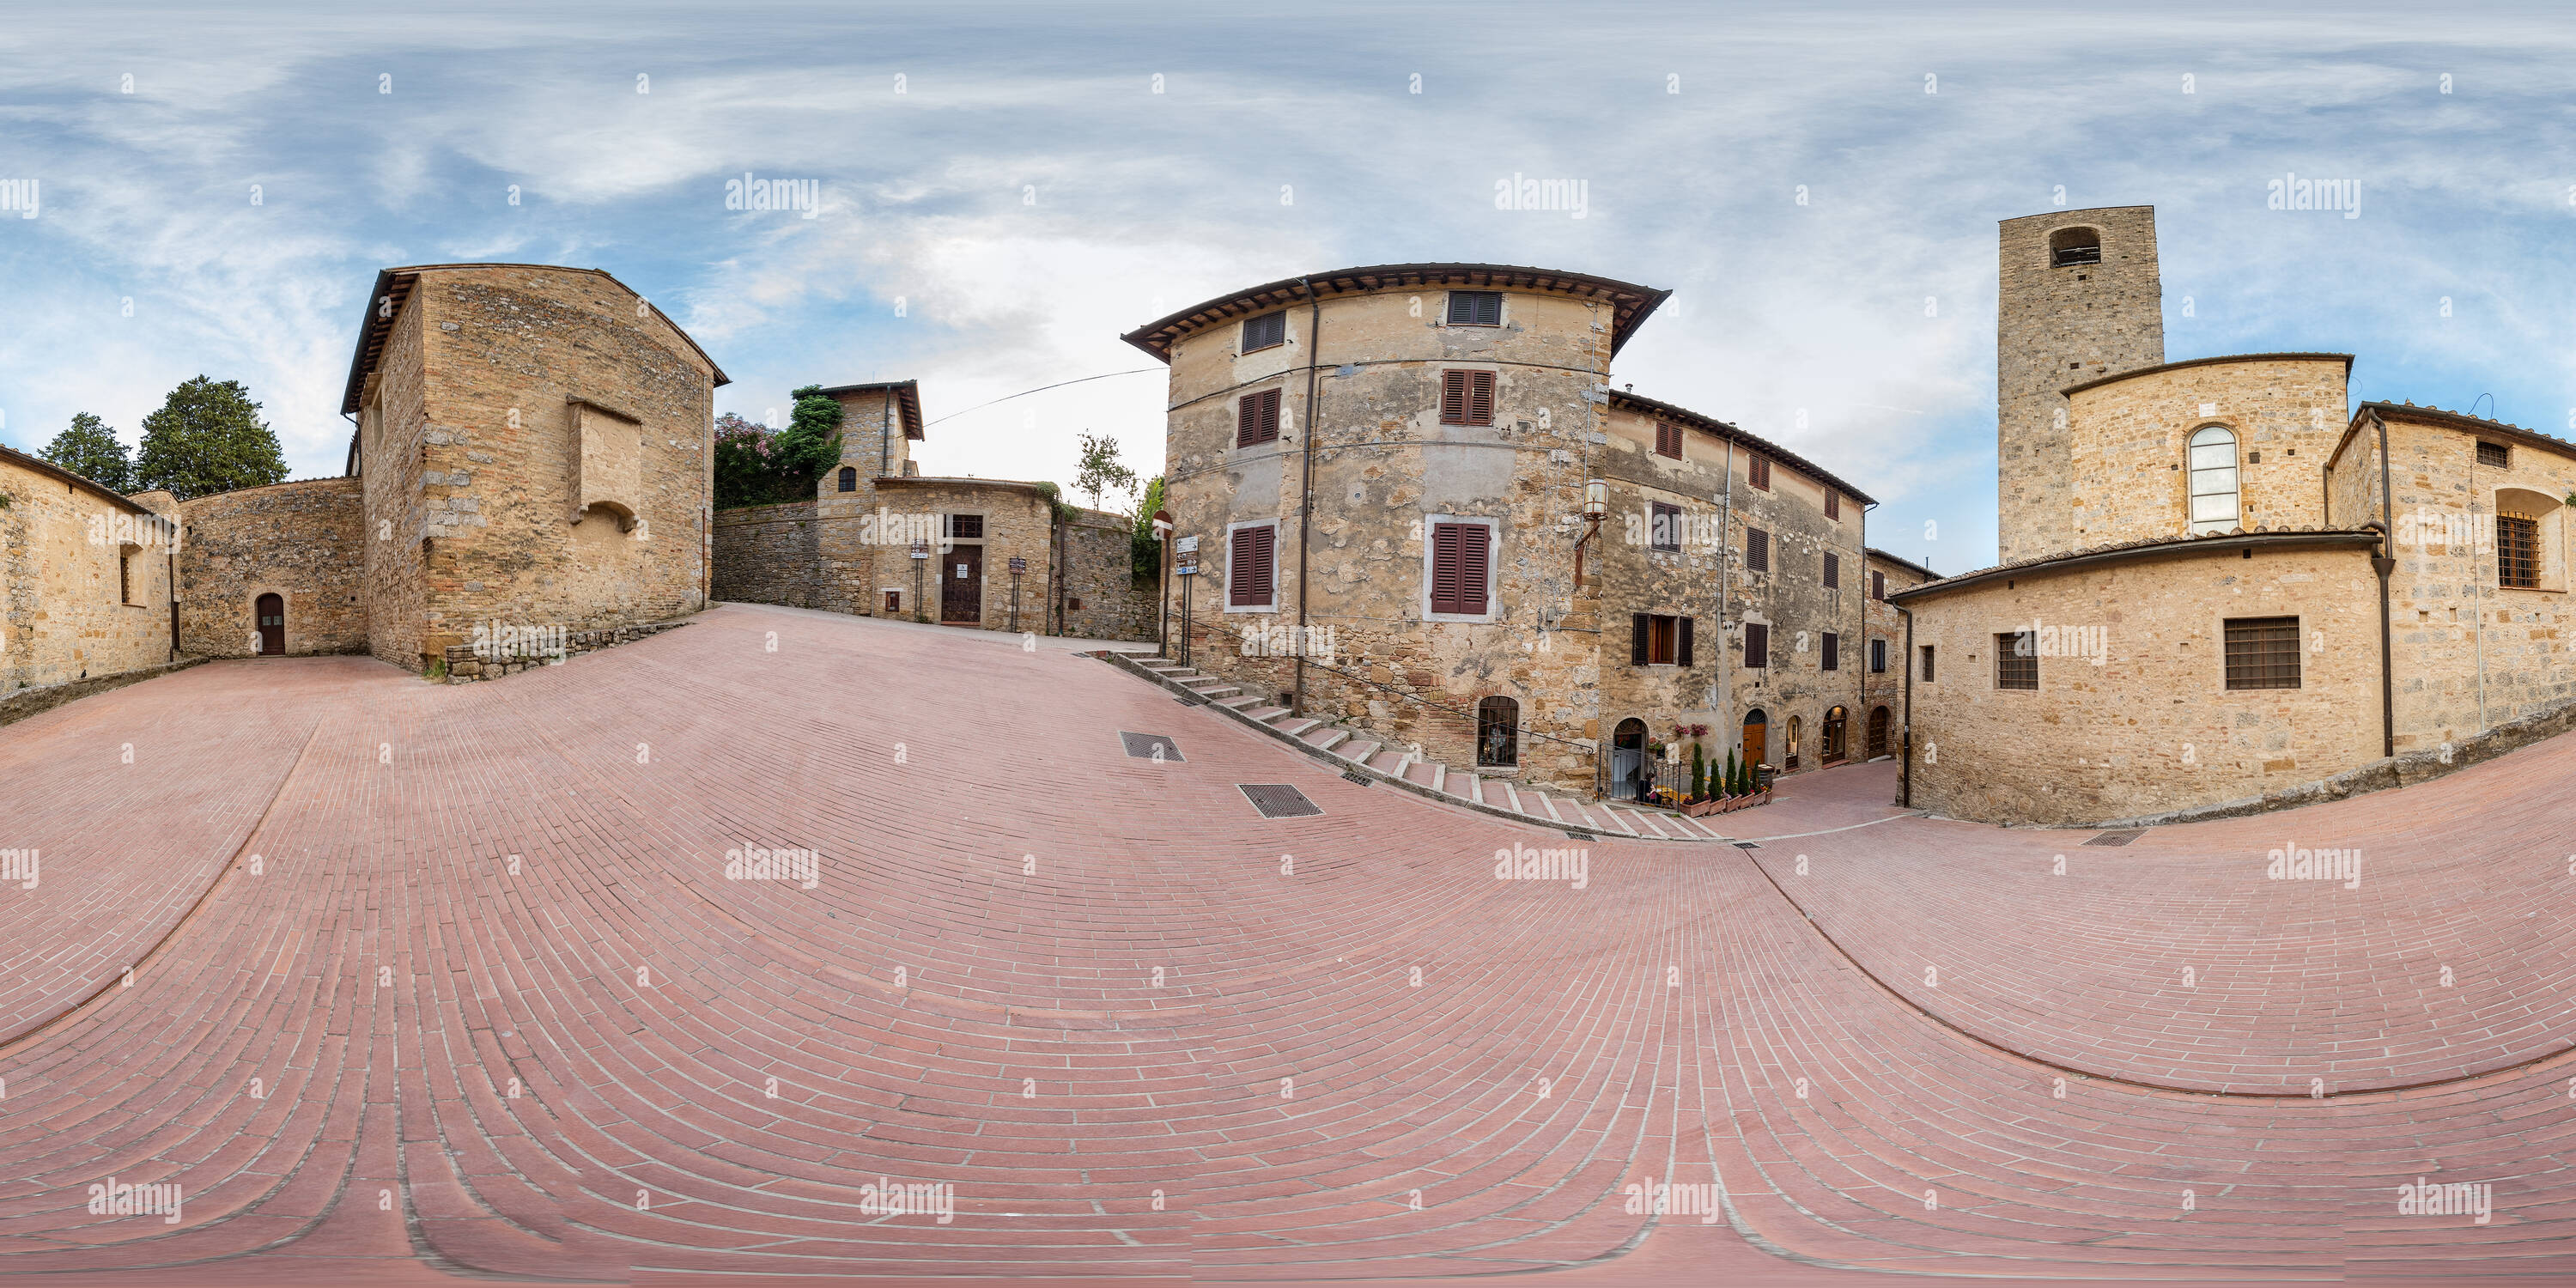 Vue panoramique à 360° de Via della Rocca. L'Italie.